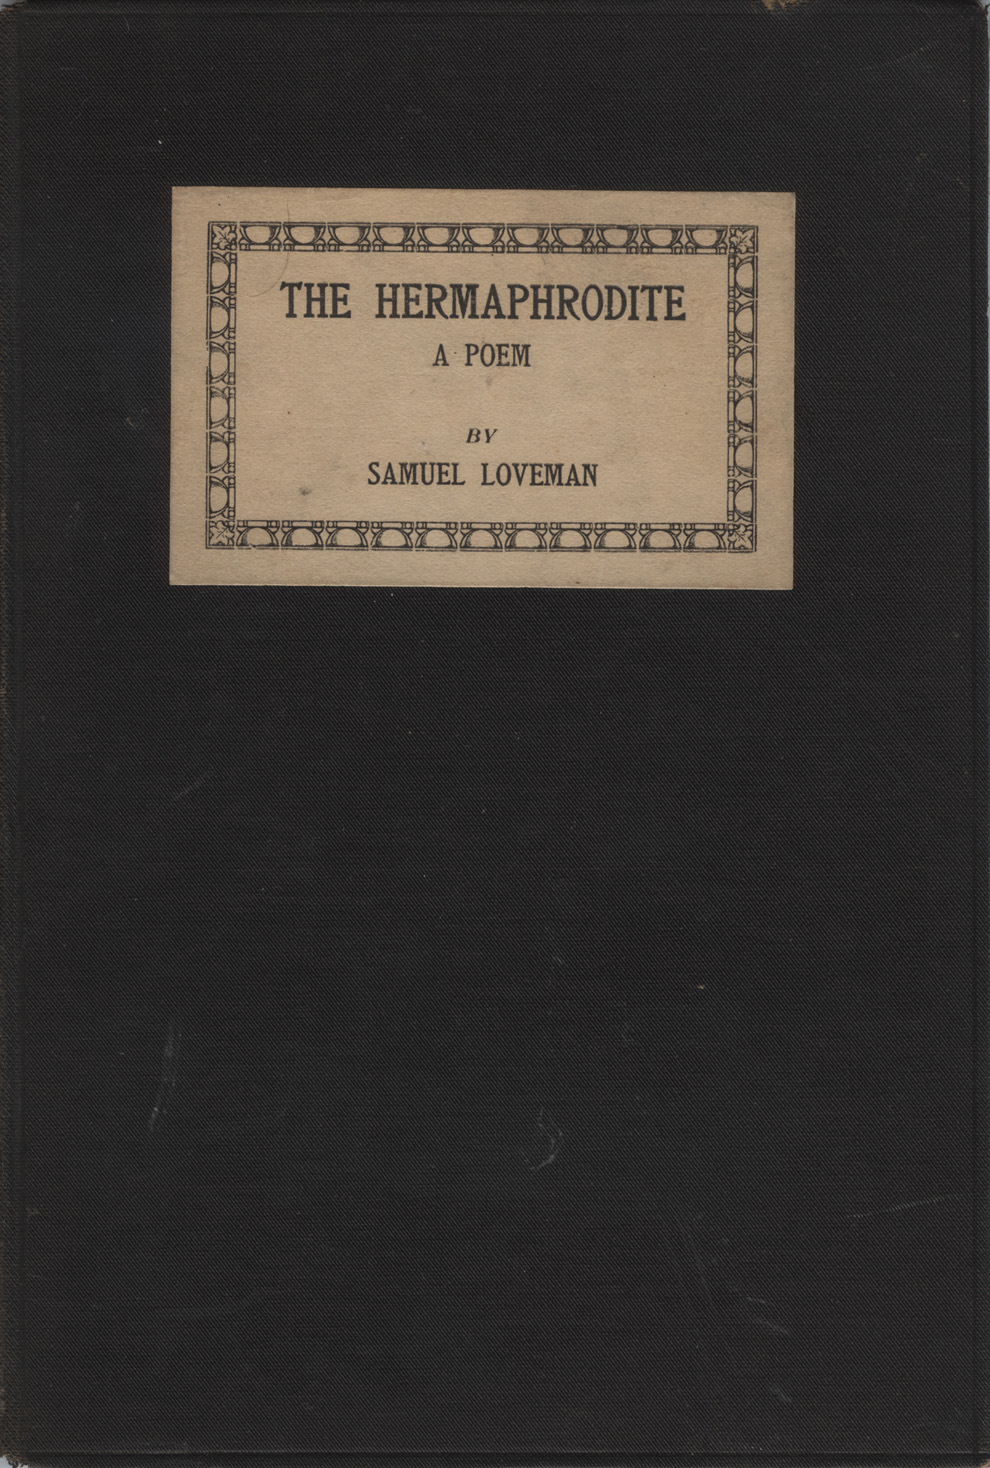 The Hermaphrodite by Samuel Loveman